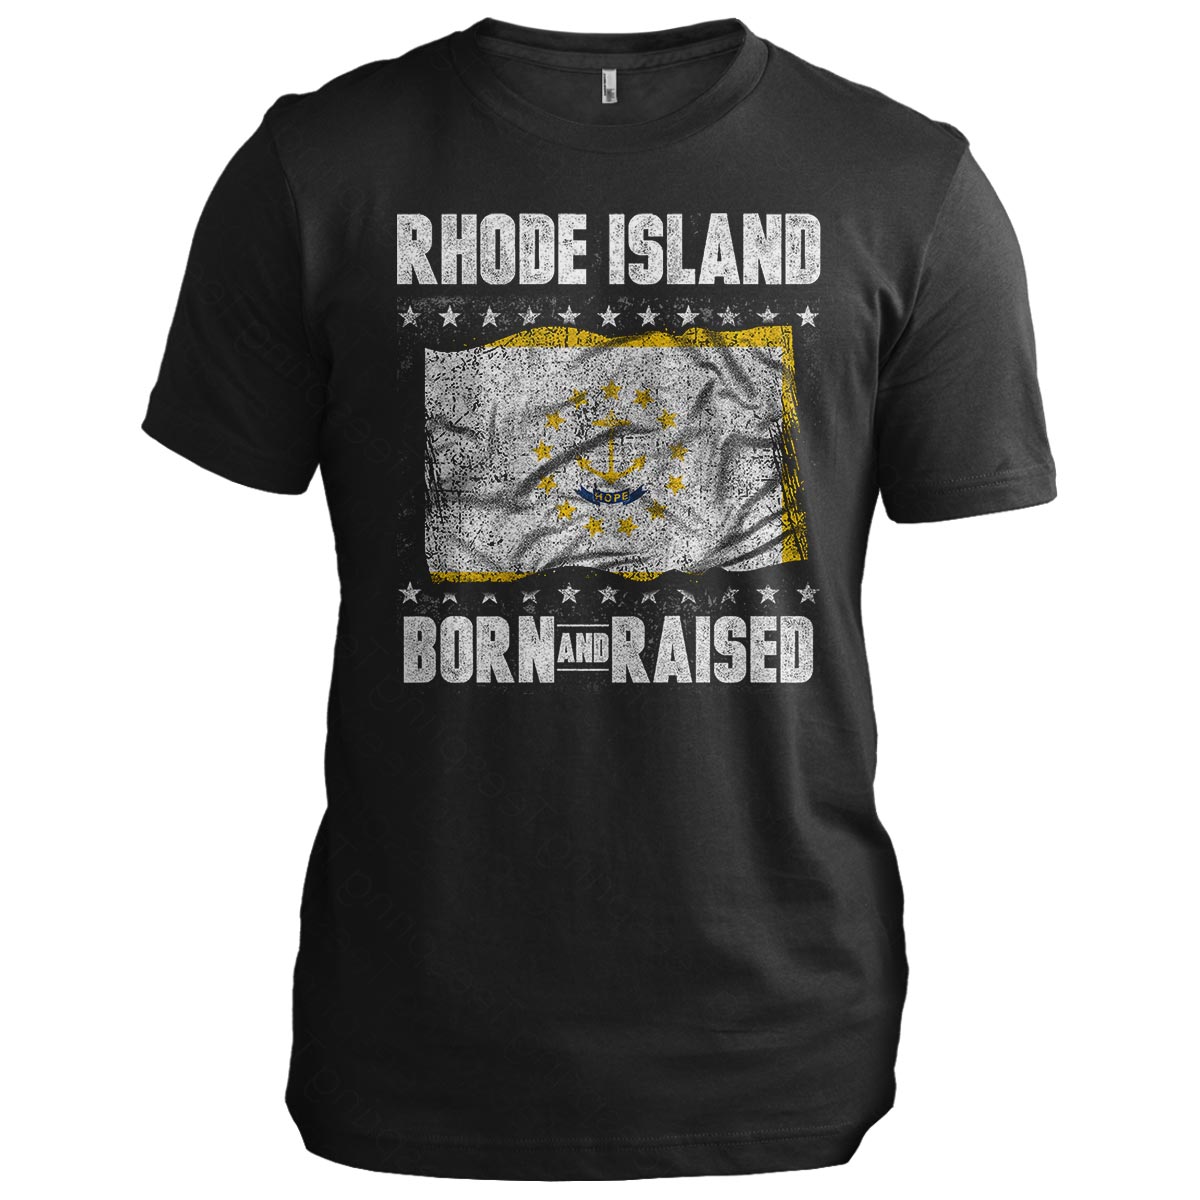 Rhode Island: Born and Raised